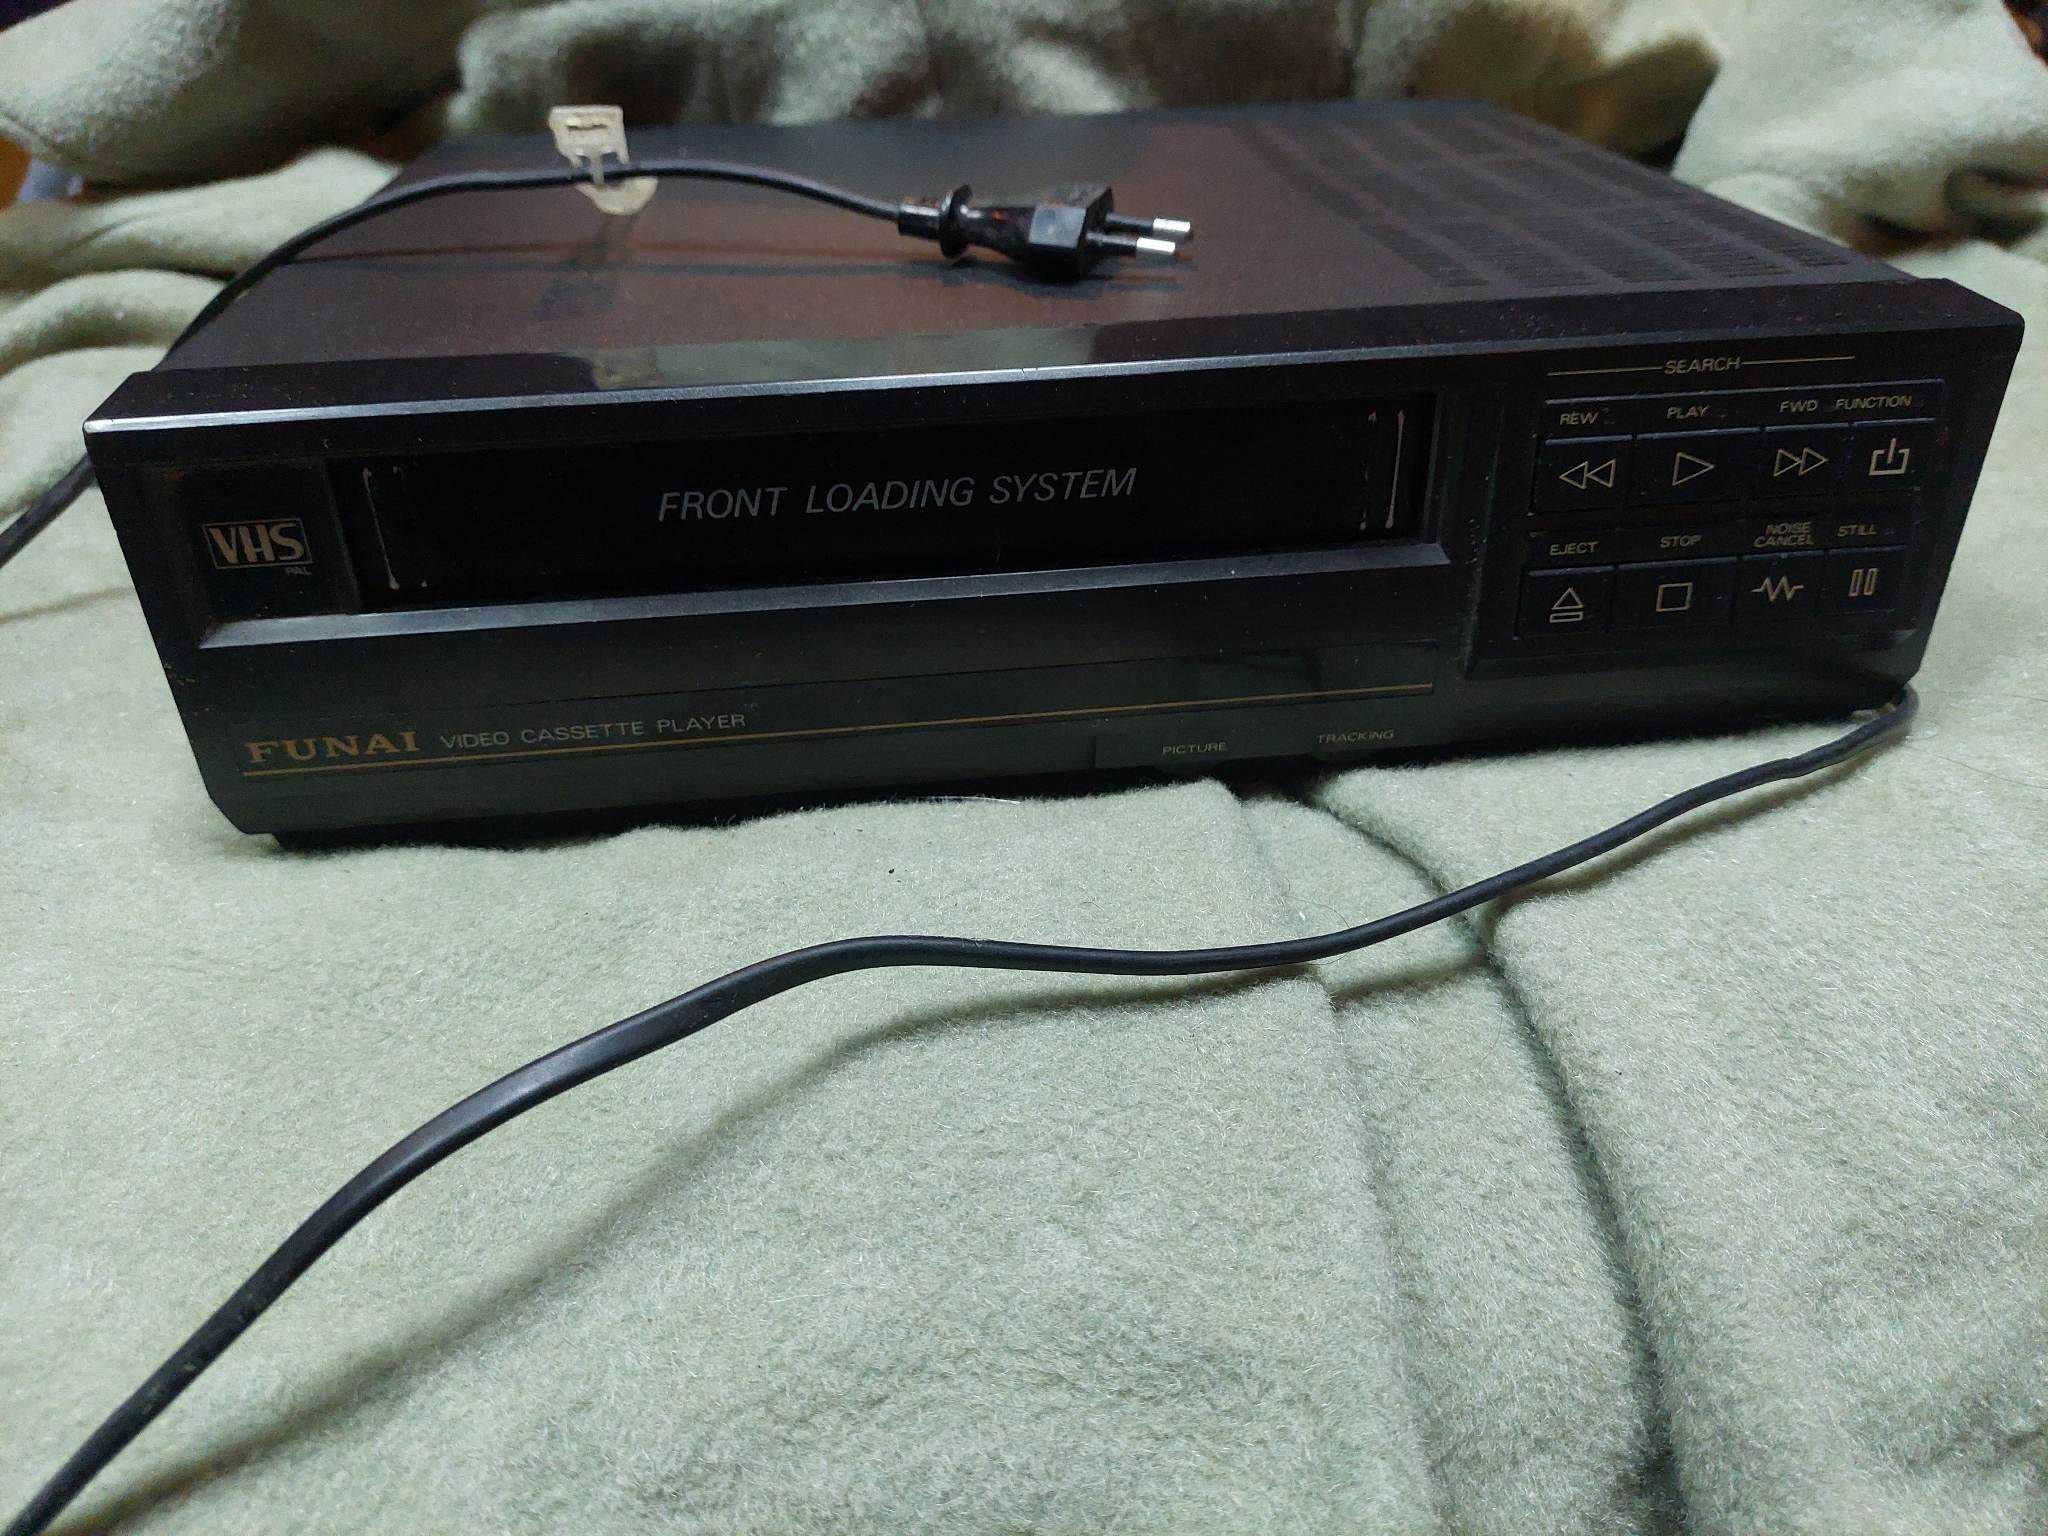 Video FUNAI vechi,Model VIP 2000,VHS,Video cassette player,seria 100